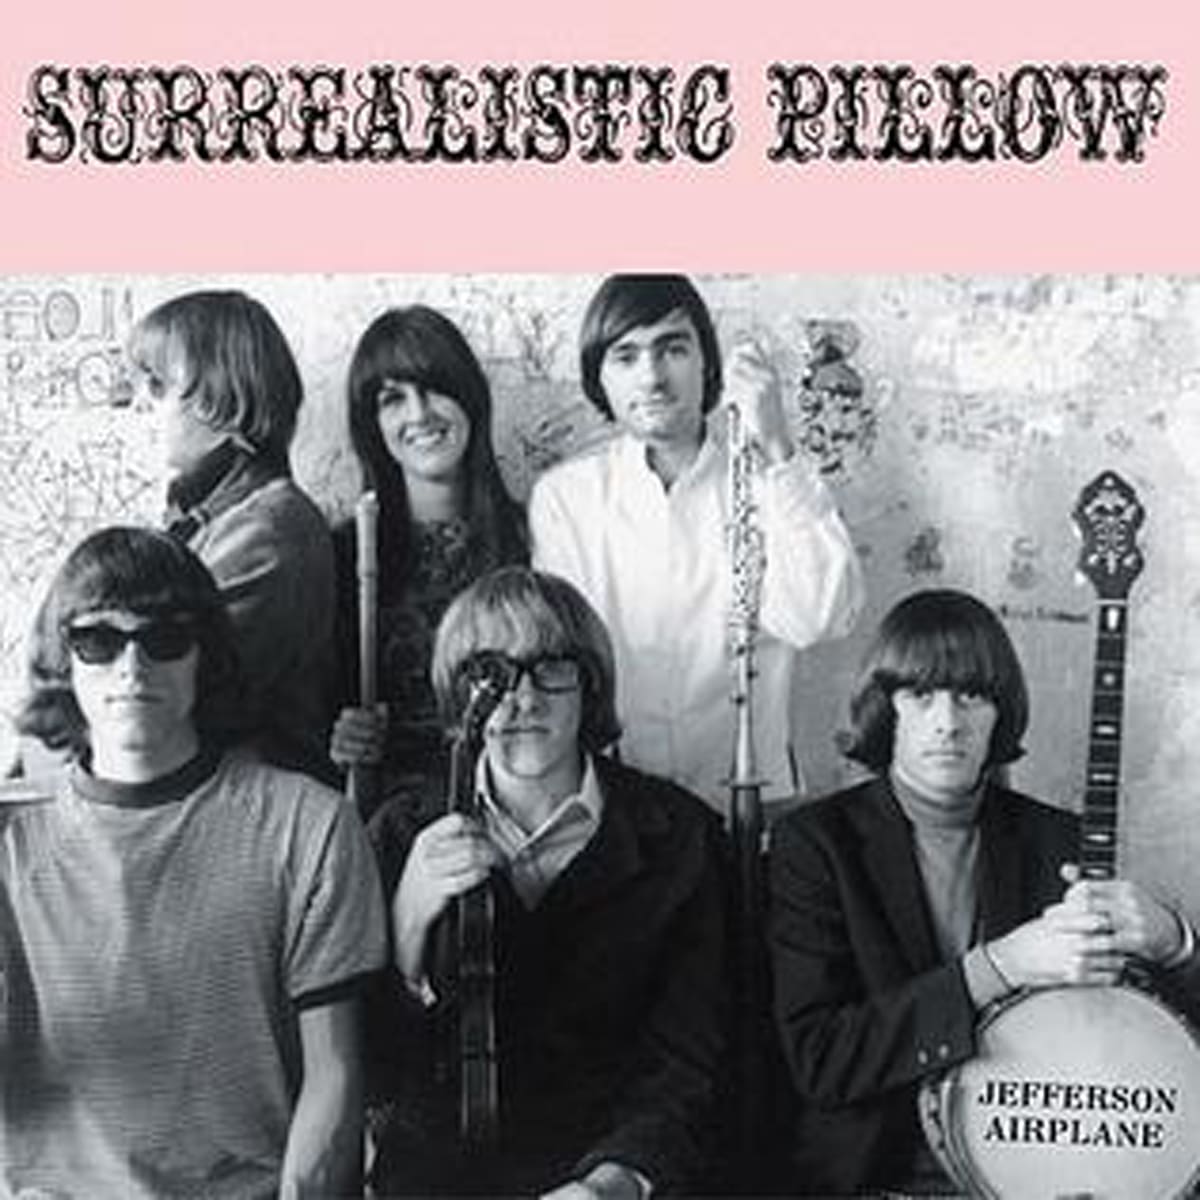 Surrealistic Pillow, Jefferson Airplane album